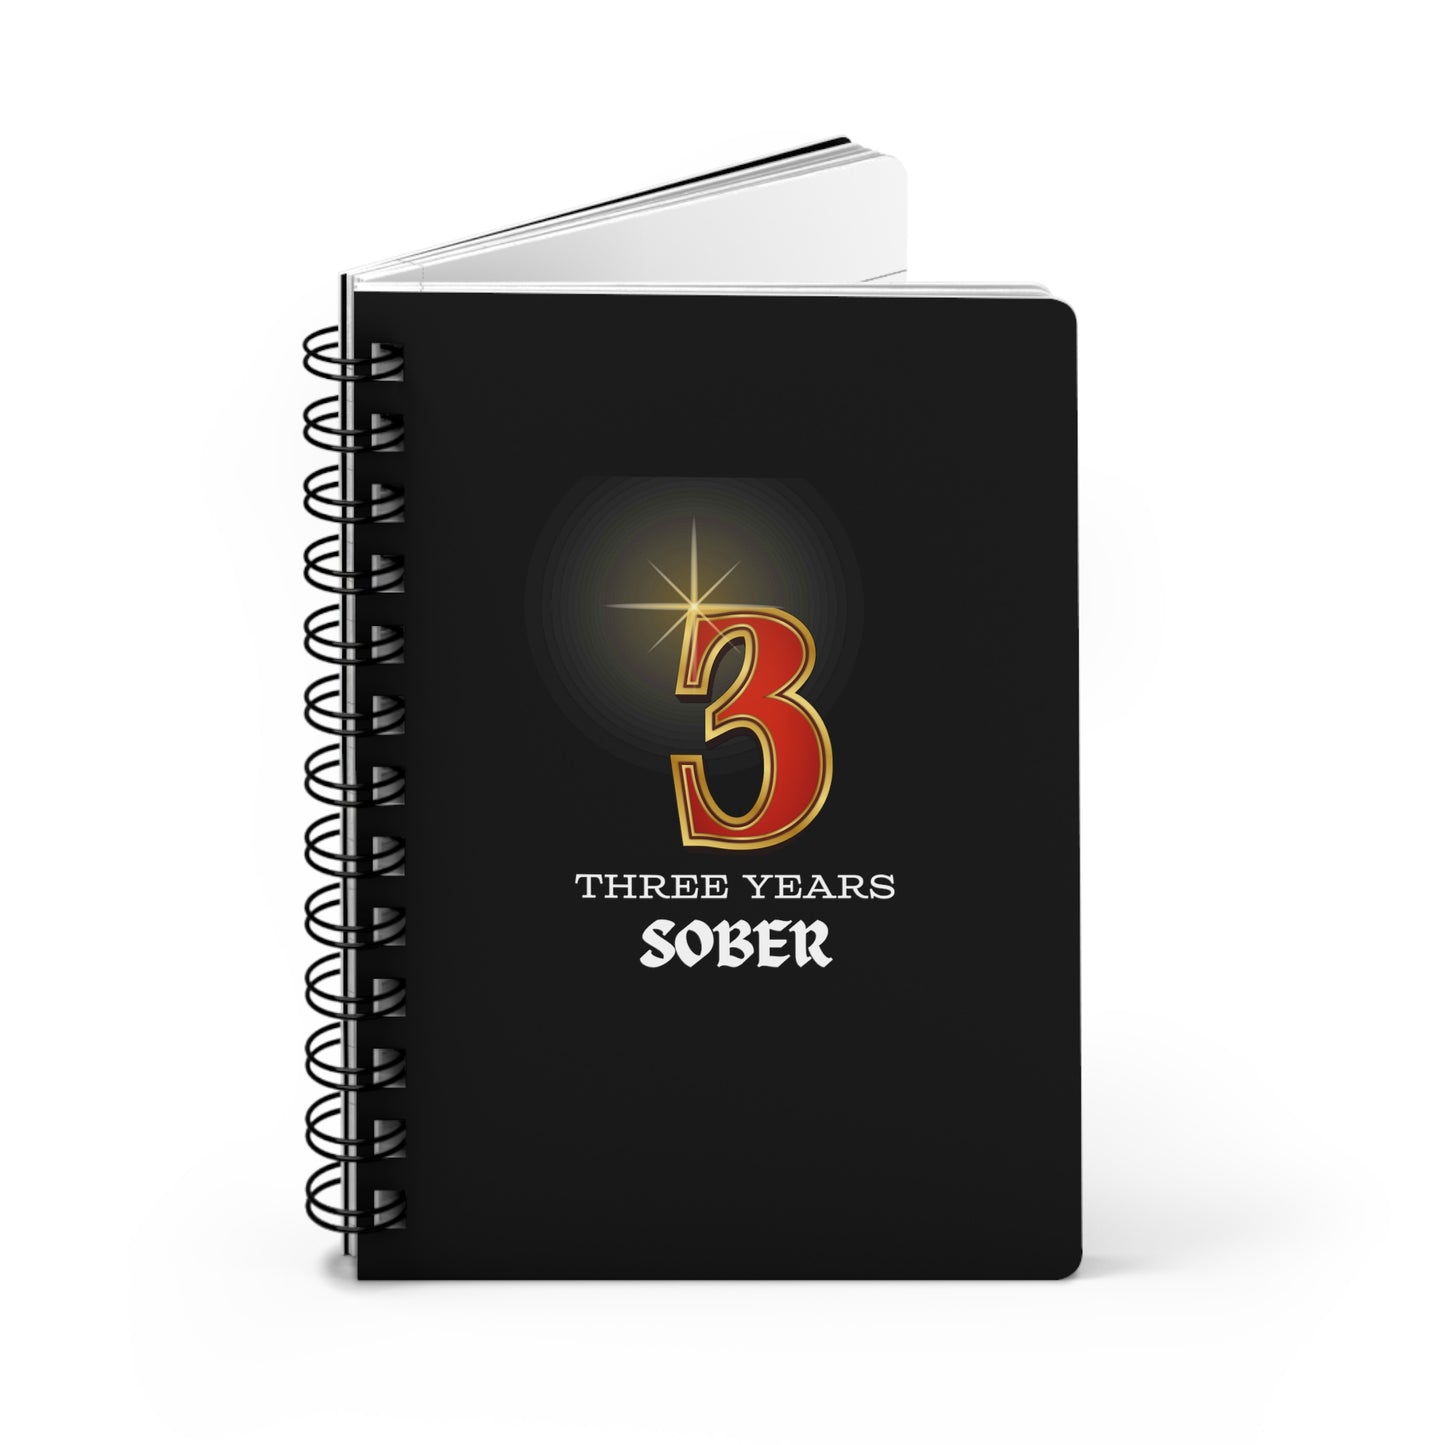 Sober Birthday Journal "Three Years" Spiral 5 x 7